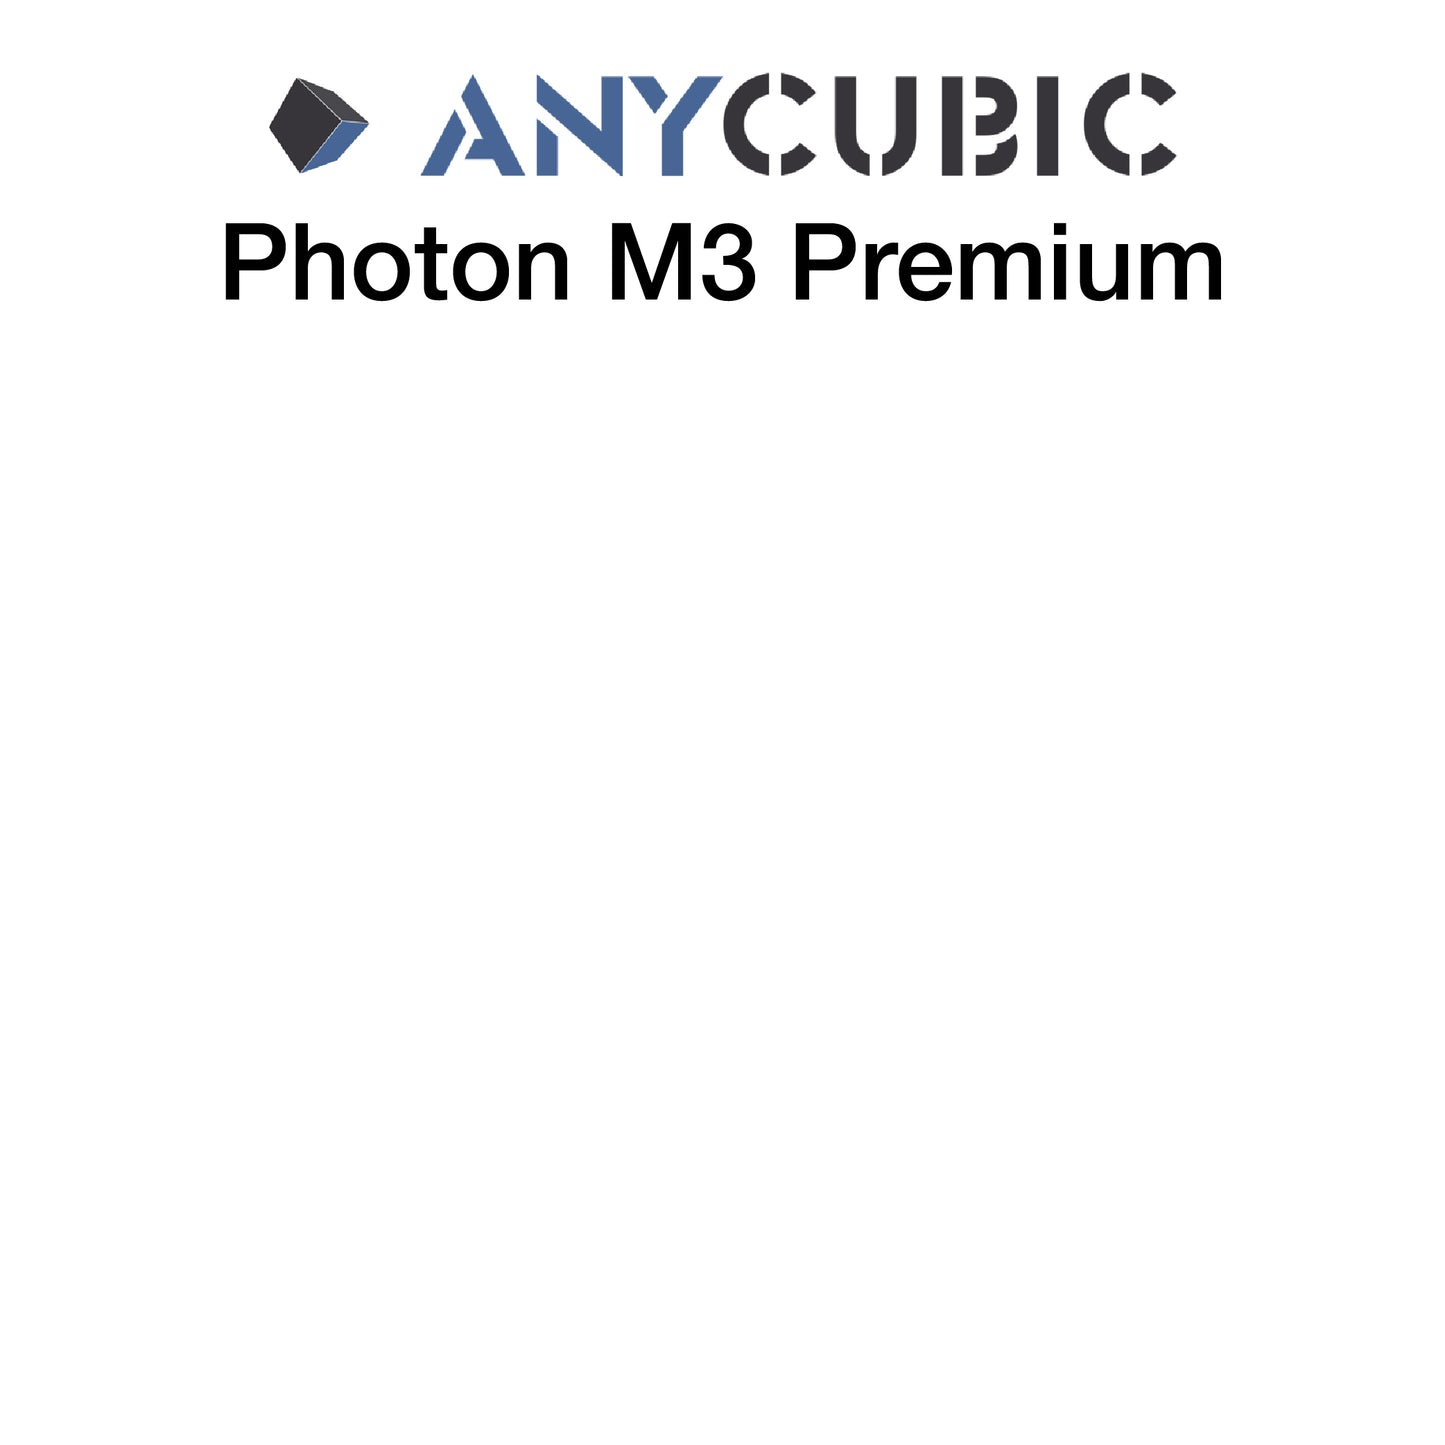 XTR Kit - Anycubic Photon M3 Premium - 244 x 150